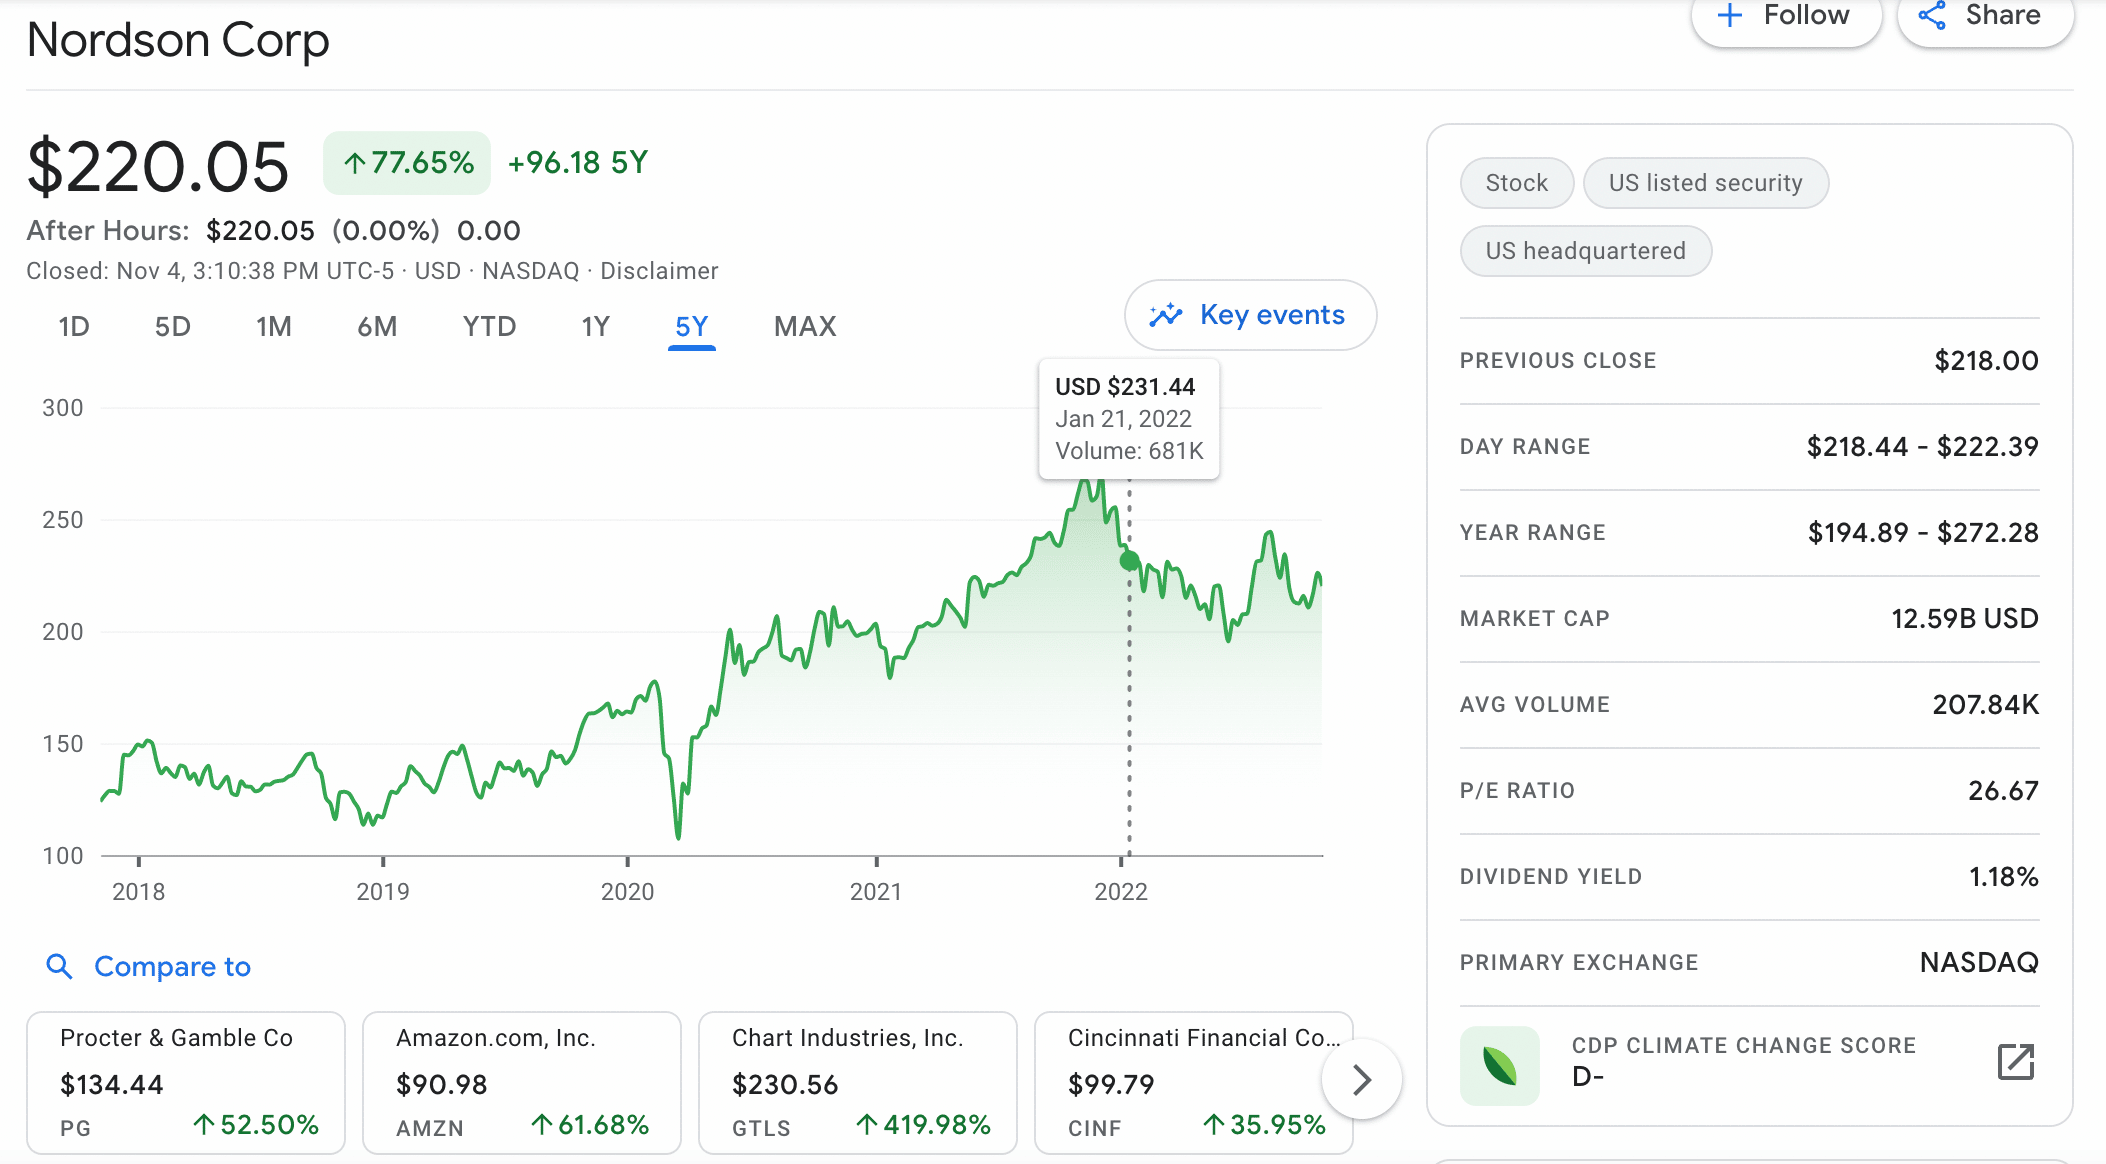 Nordson Corp stock price 